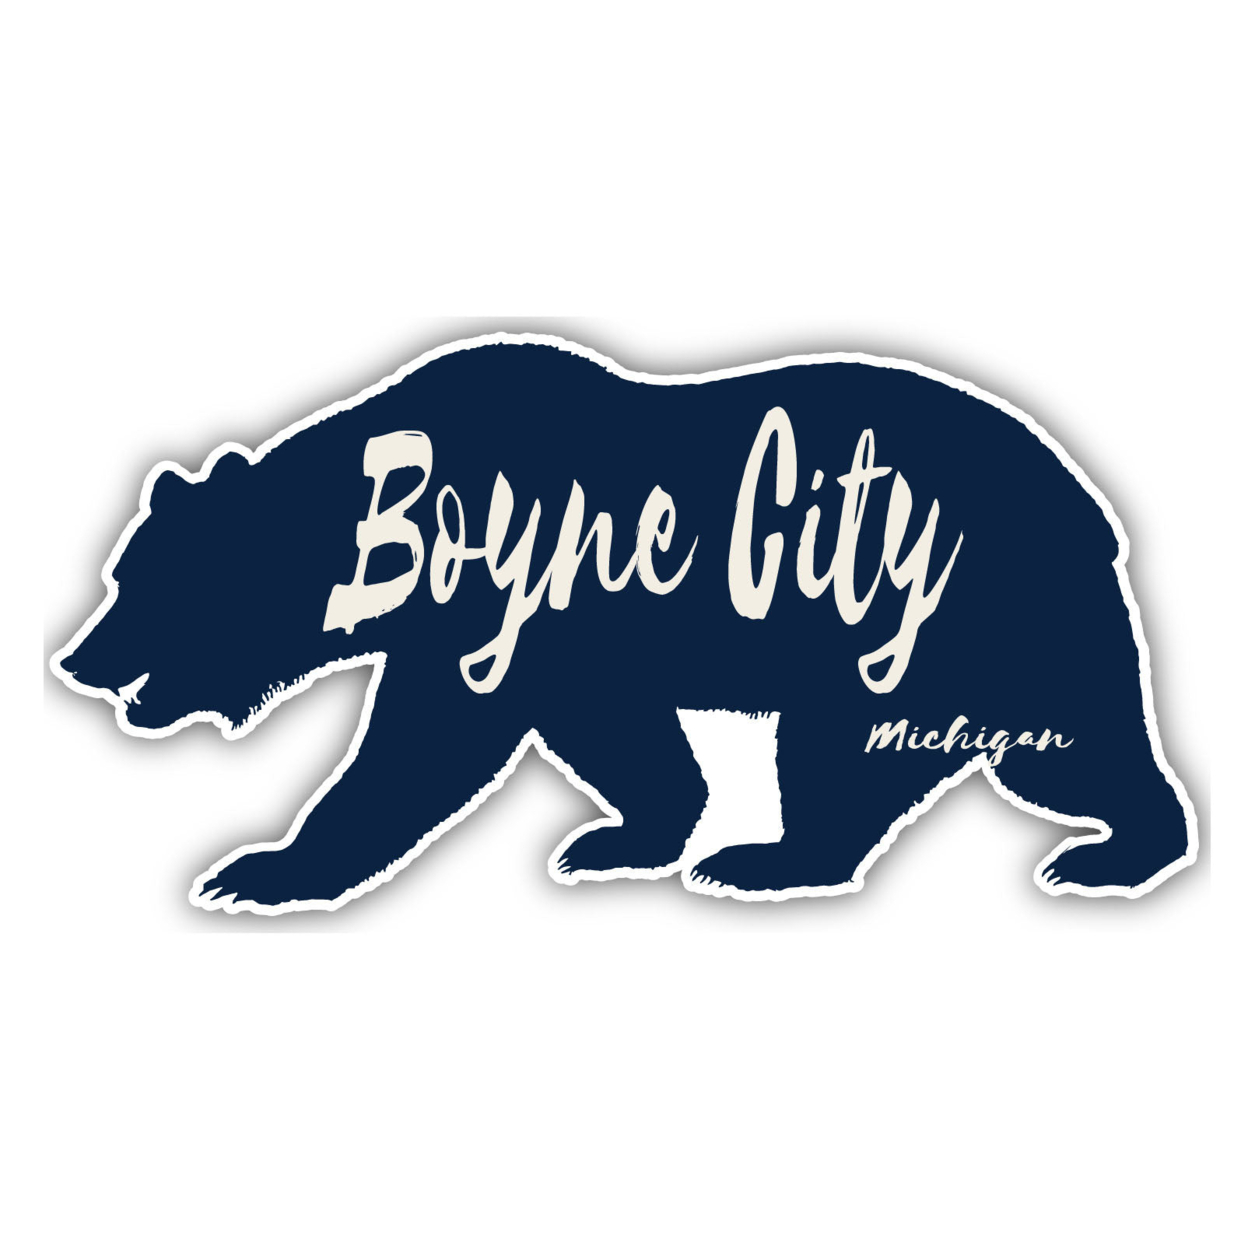 Boyne City Michigan Souvenir Decorative Stickers (Choose Theme And Size) - Single Unit, 2-Inch, Bear